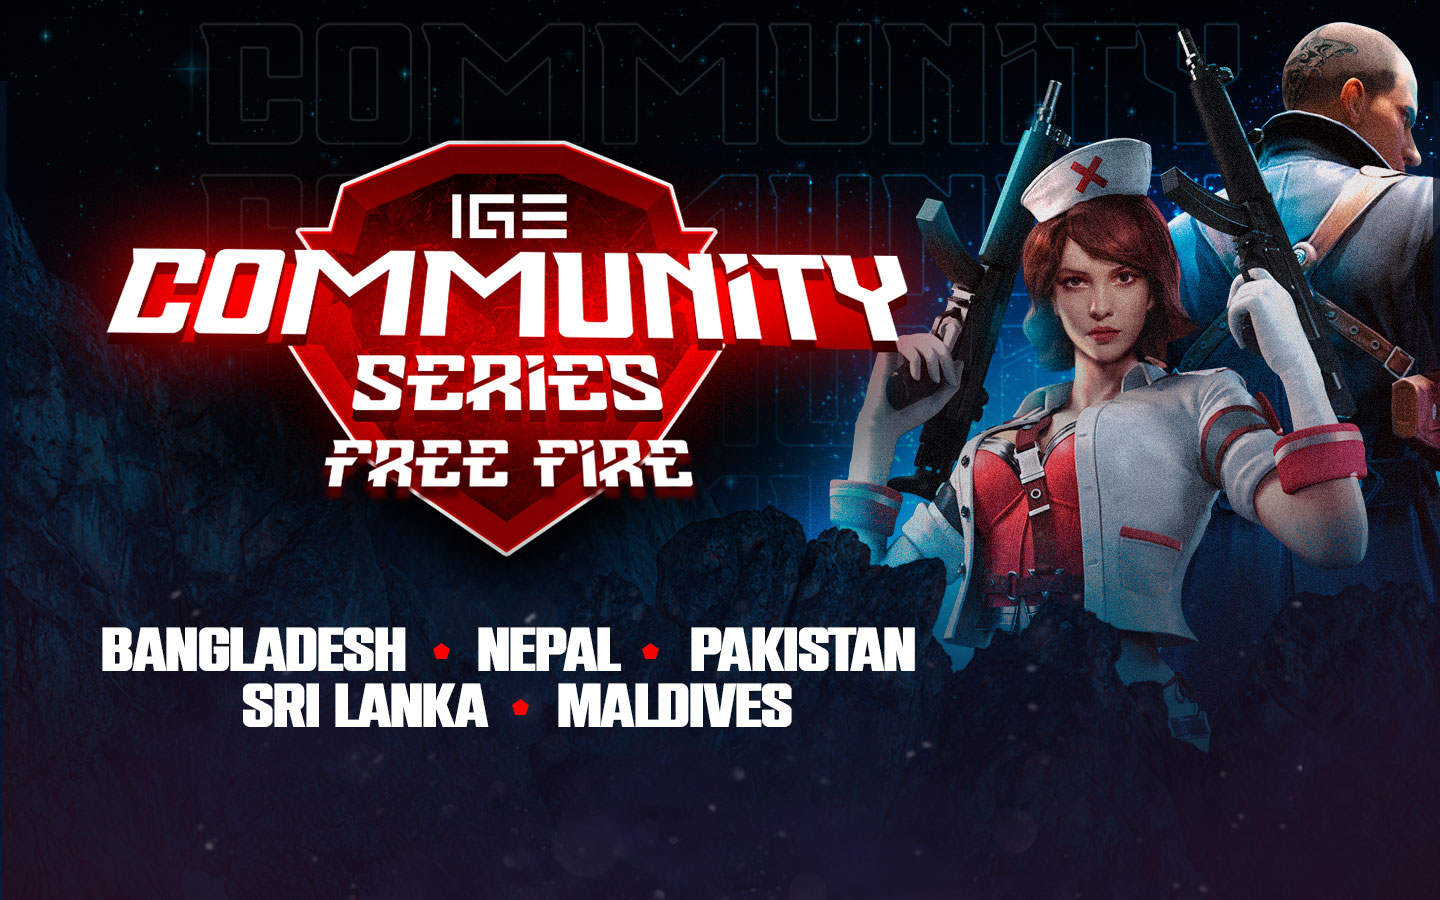 Free Fire Community